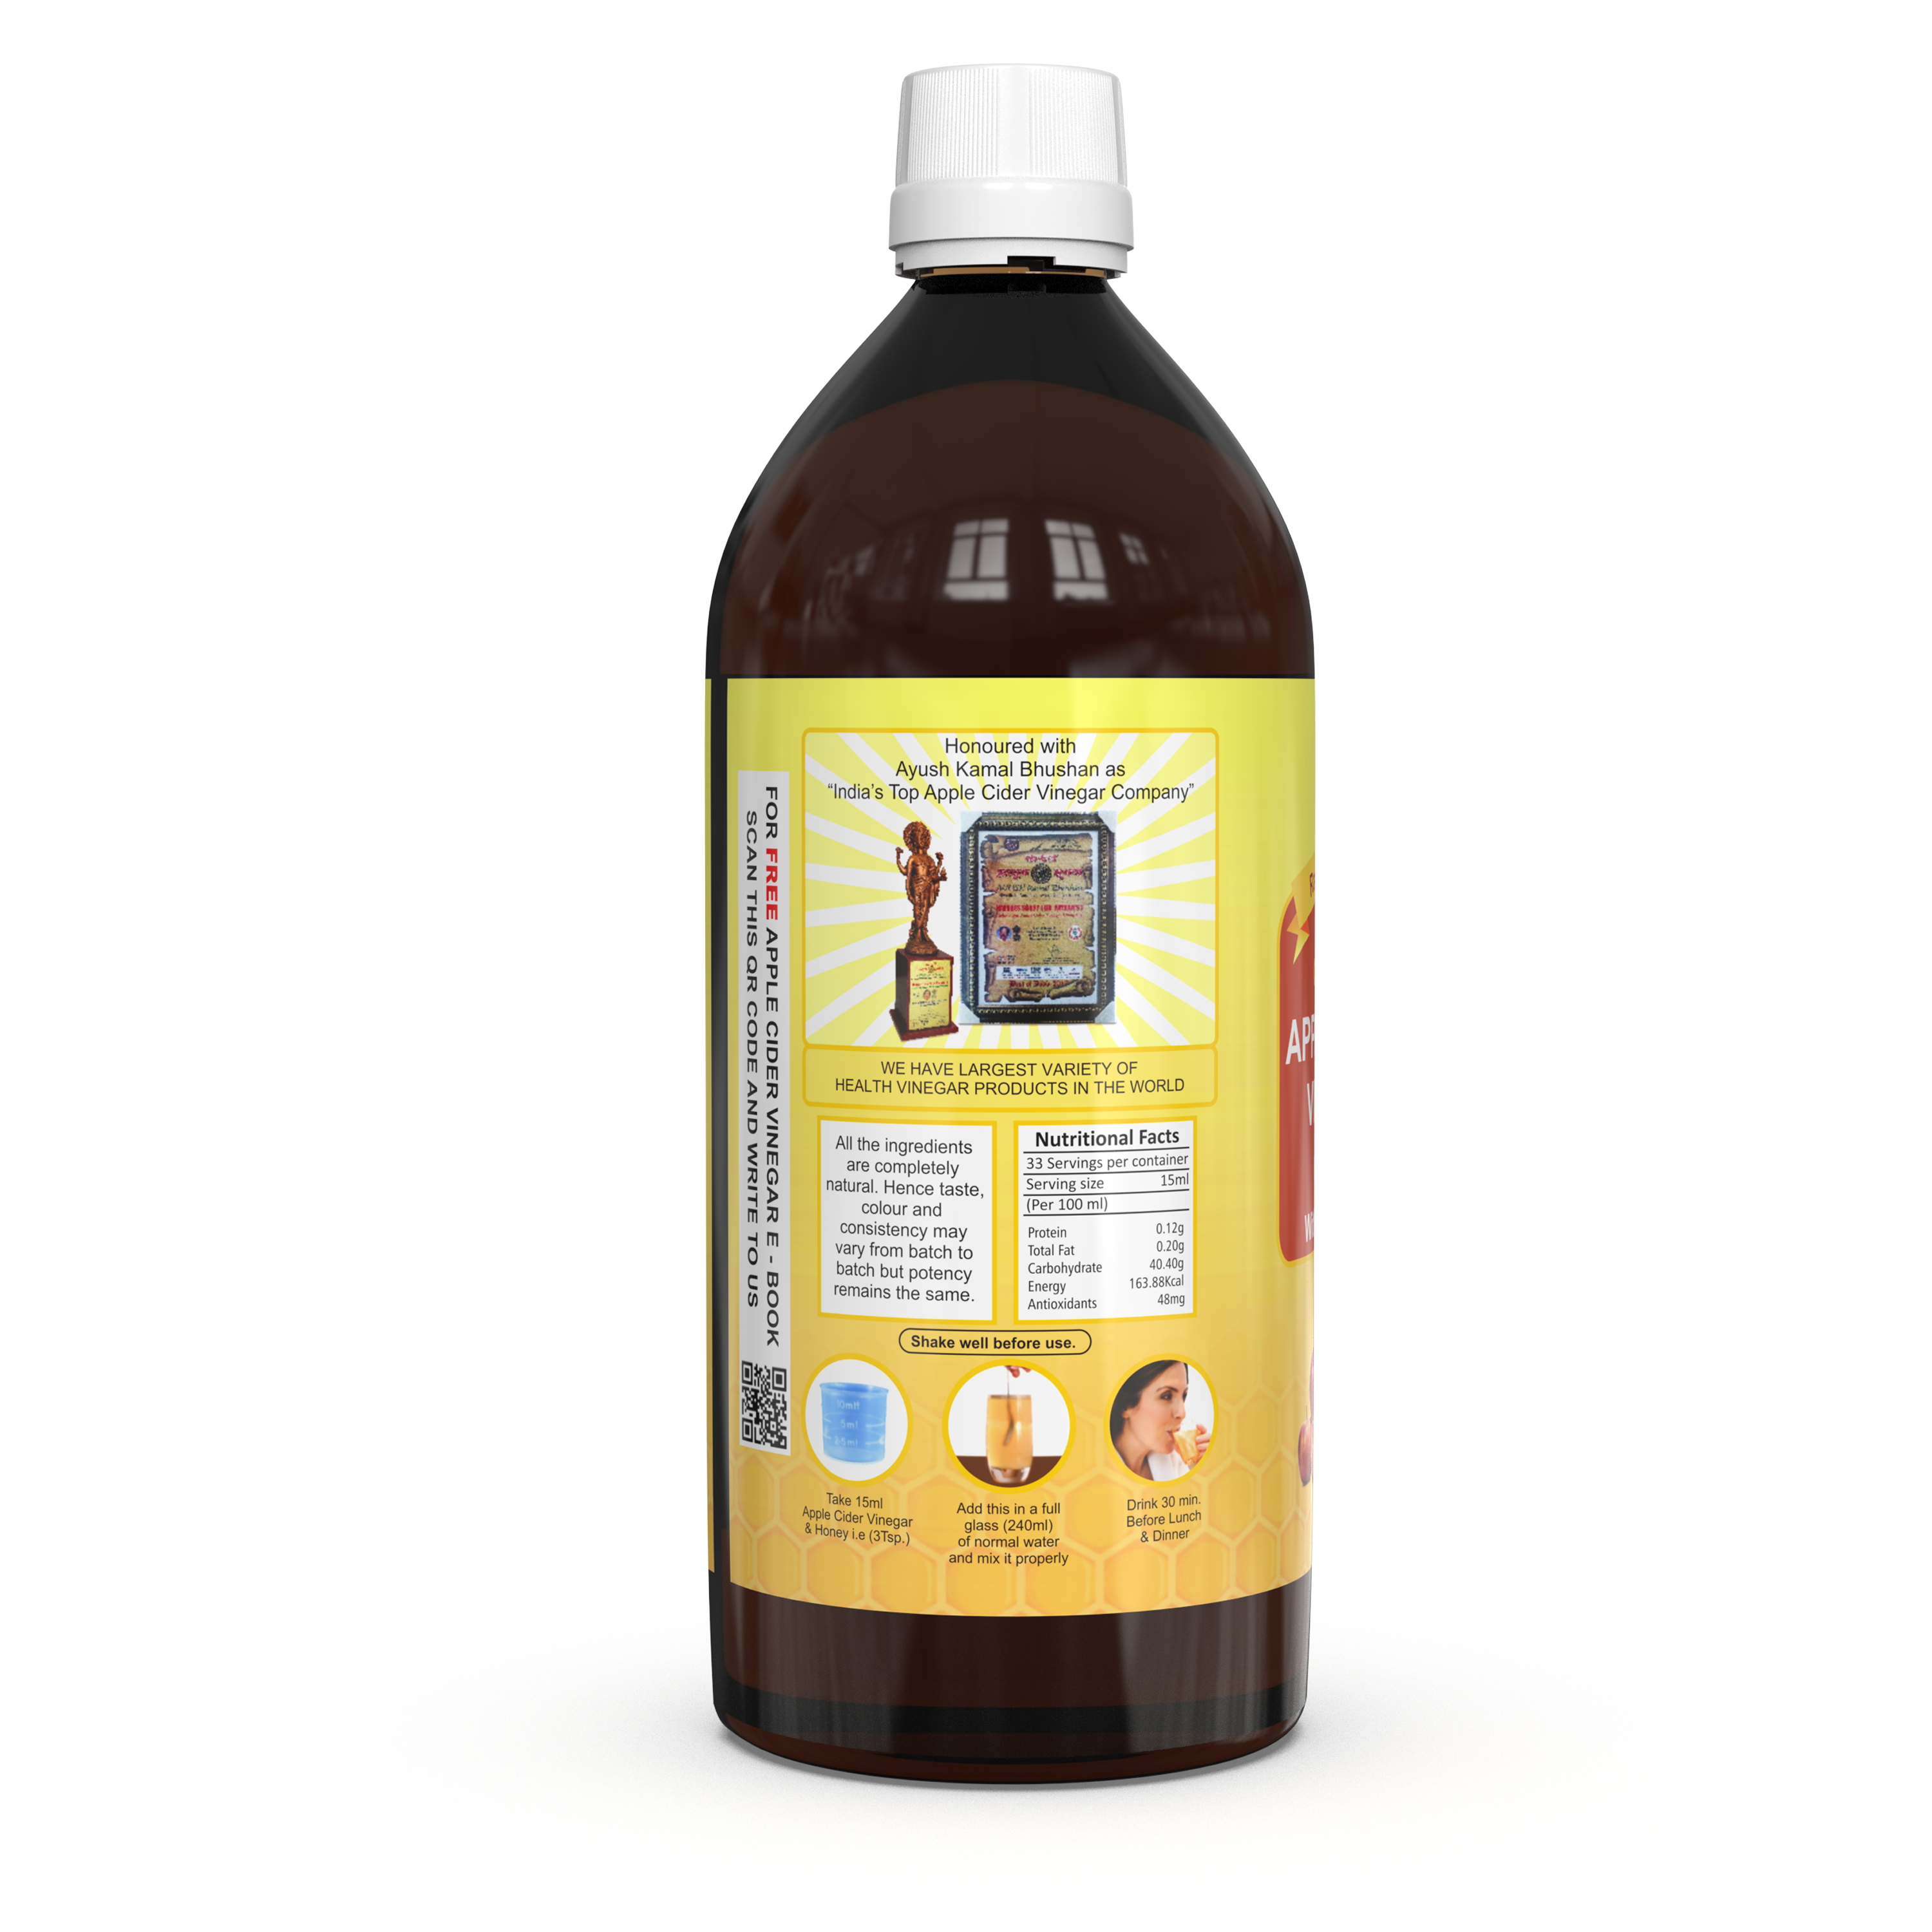 Buy Dr. Patkar's Apple Cider Vinegar with Honey at Best Price Online